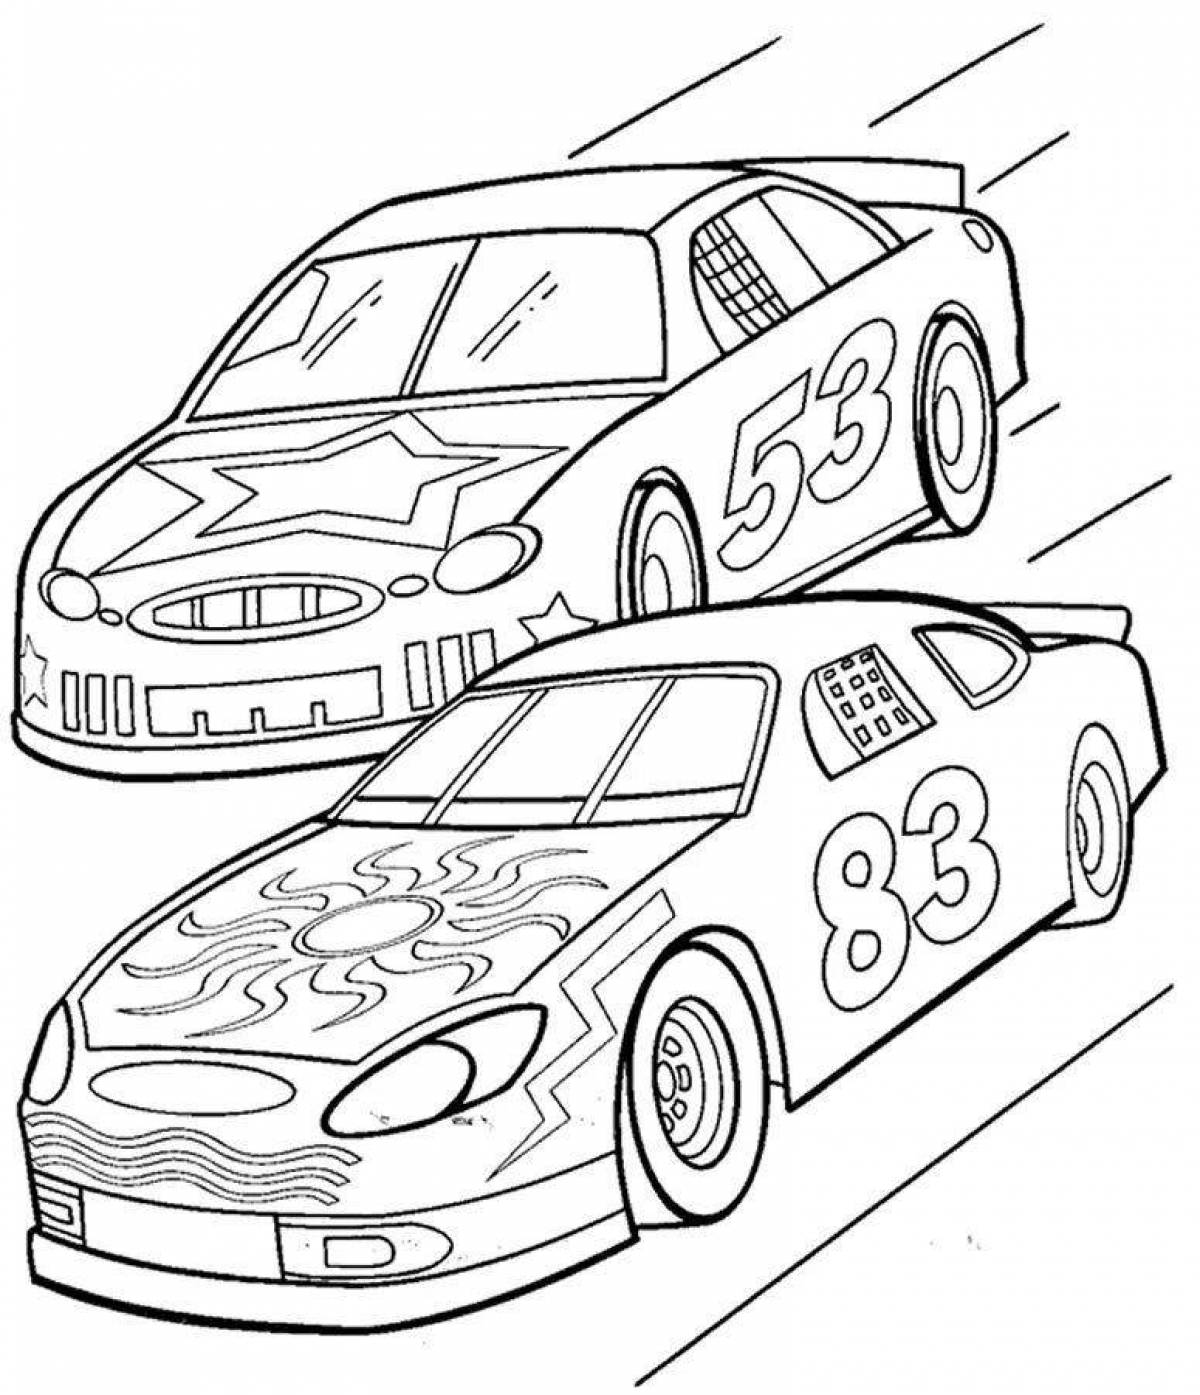 Impressive racing car coloring book for kids